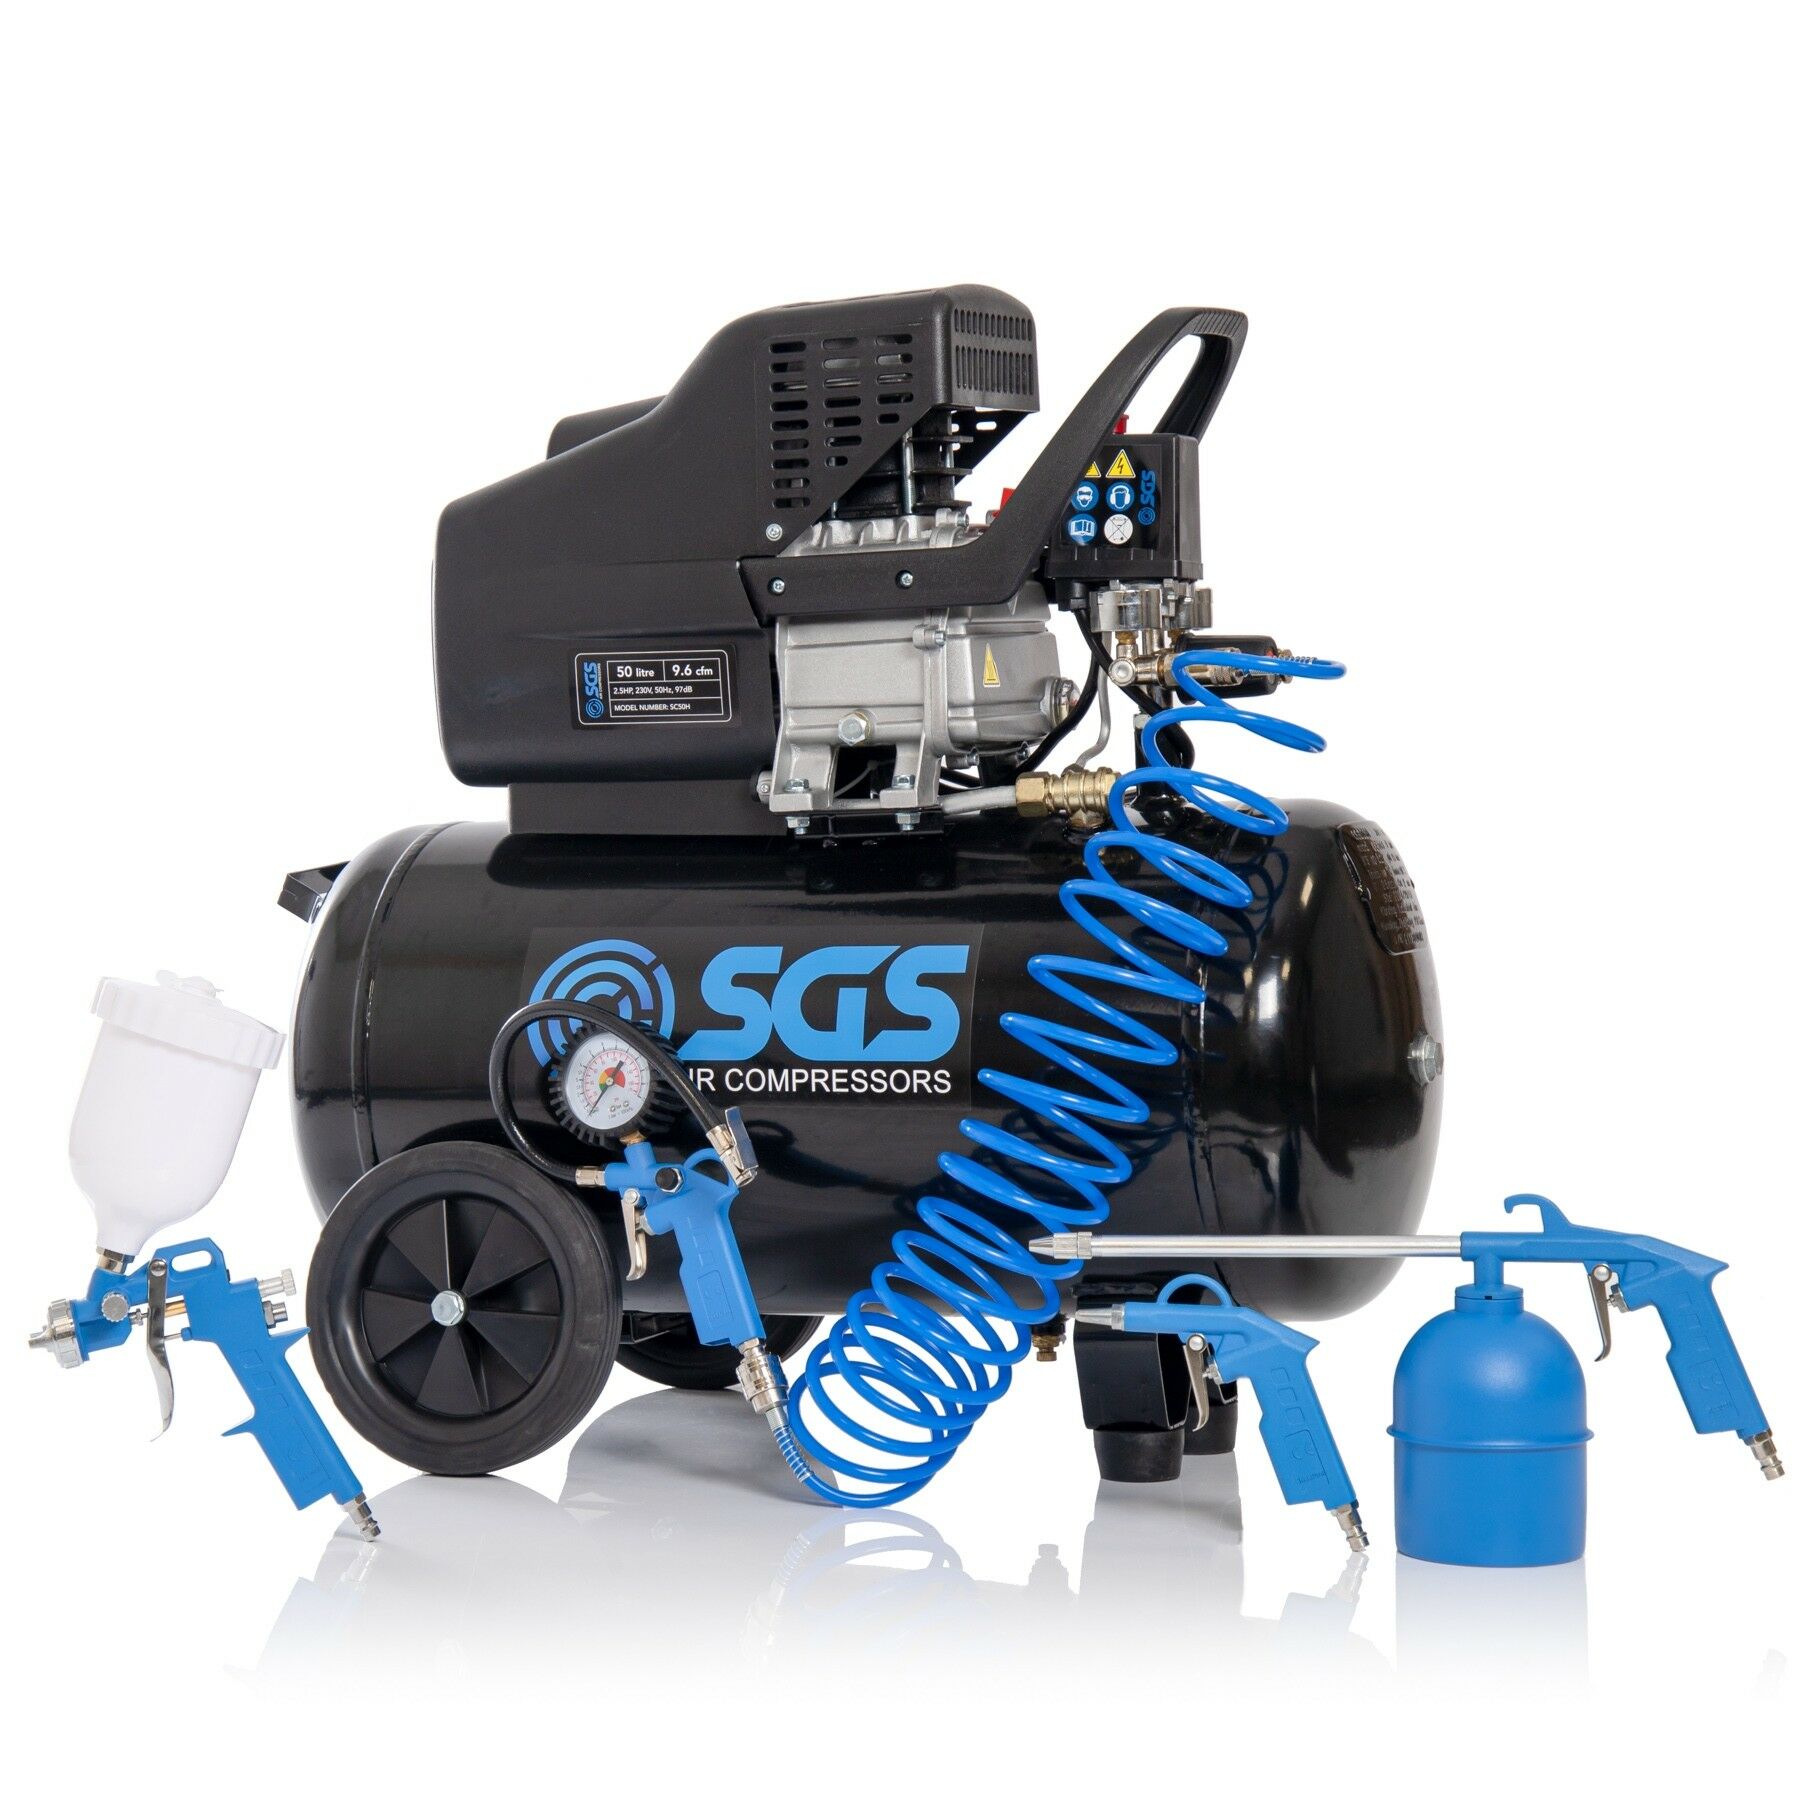 SGS 50 Litre Direct Drive Air Compressor & 5 Piece Tool Kit - 9.6CFM  2.5HP  50L